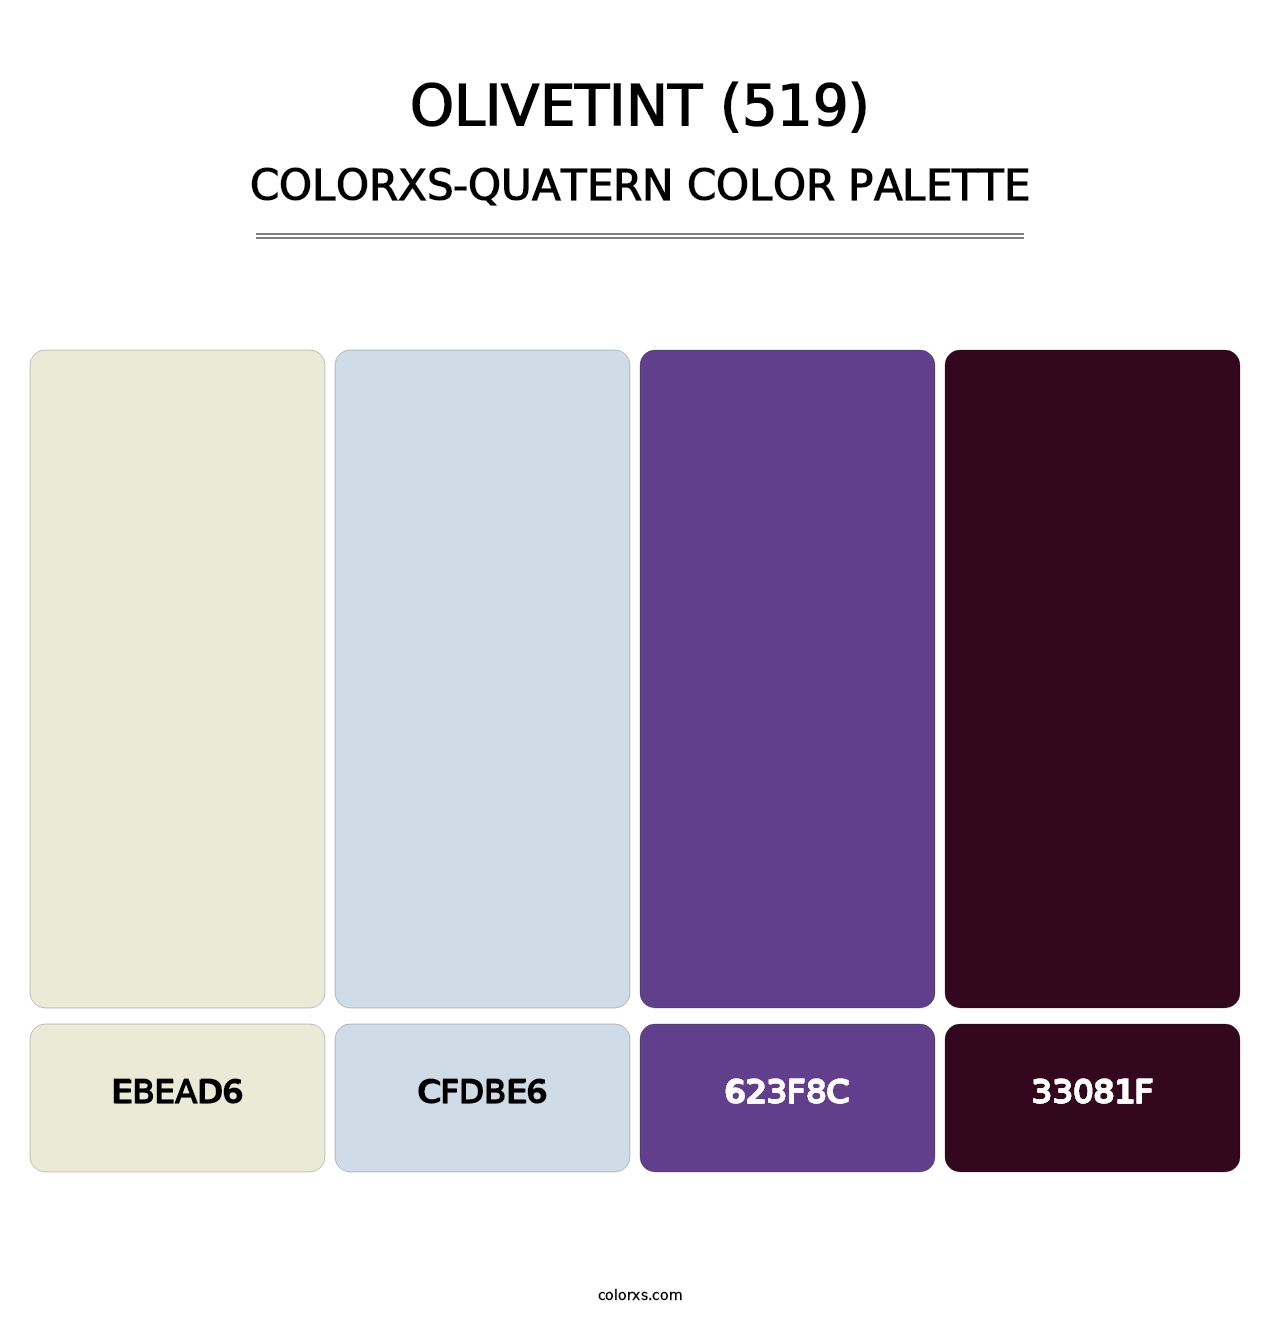 Olivetint (519) - Colorxs Quatern Palette